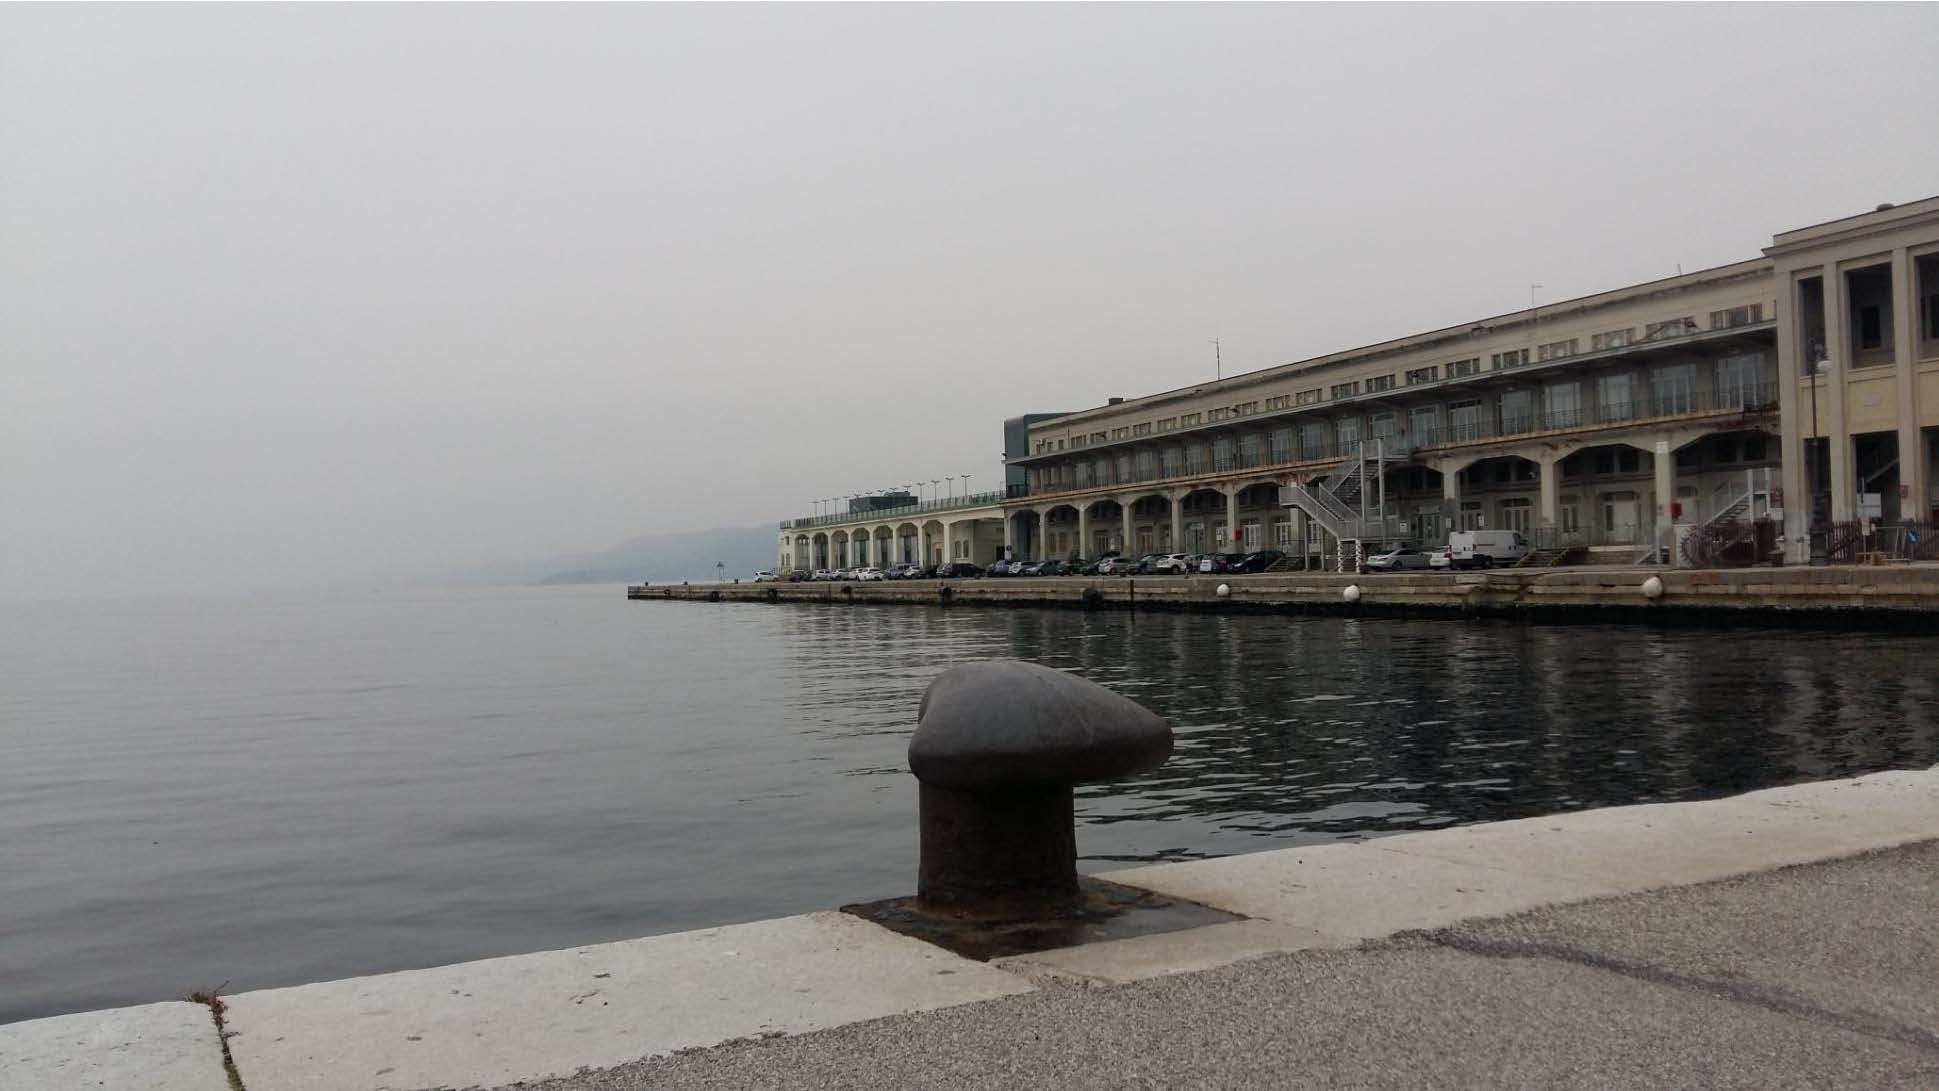 PORTUS-37-may-2019-FOCUS-Clemente-Image_02_Banchine portuali Trieste